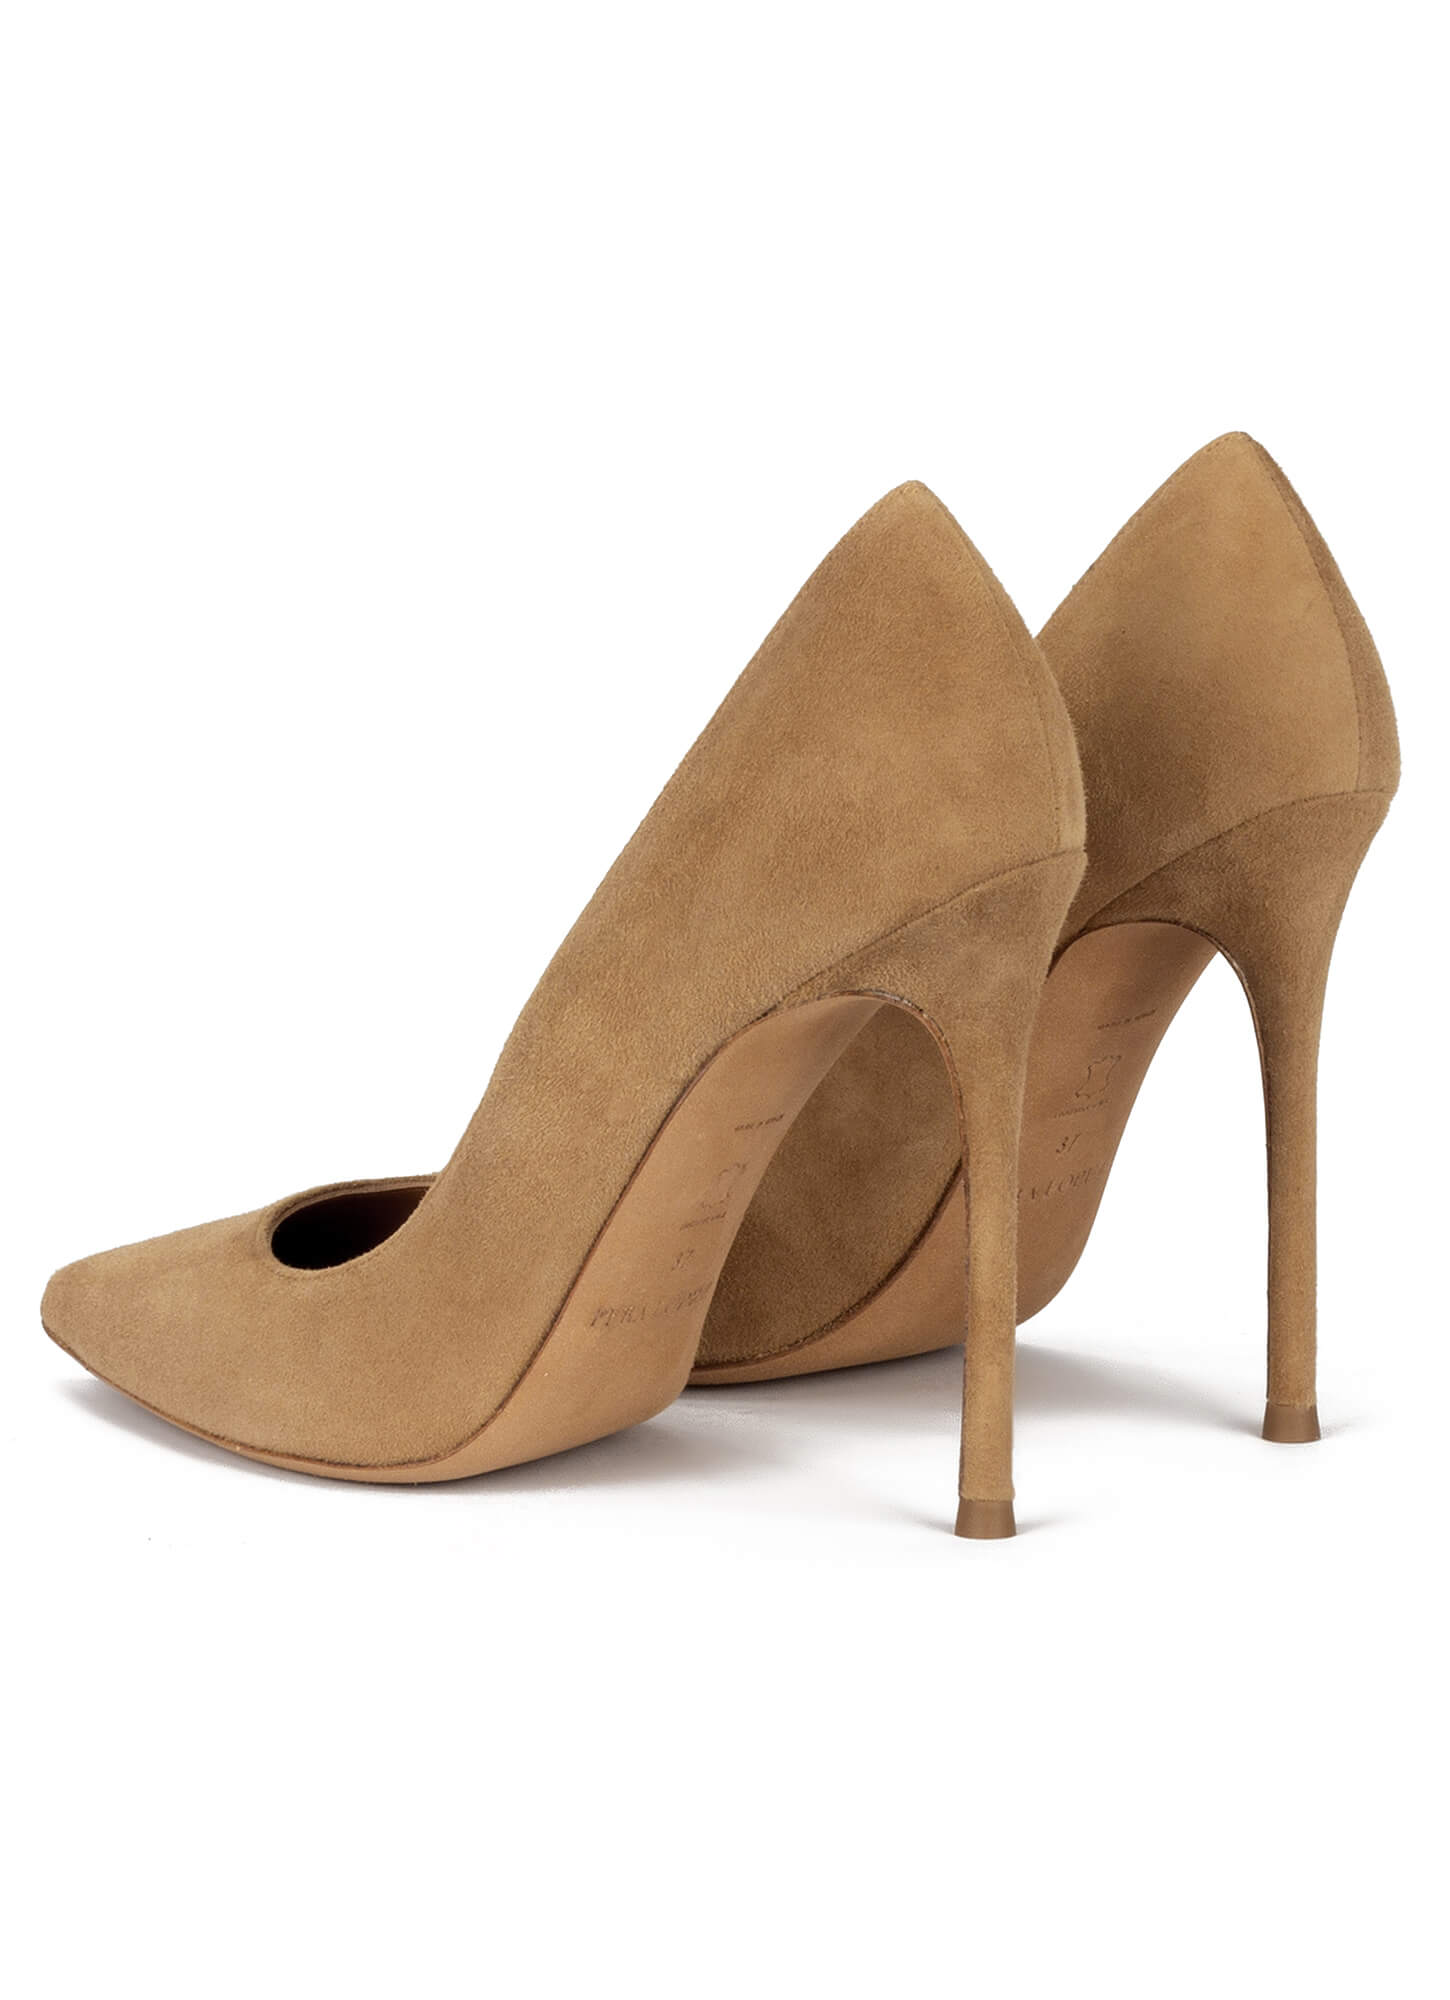 Women's Shoes - Brown, Court Shoes | John Lewis & Partners